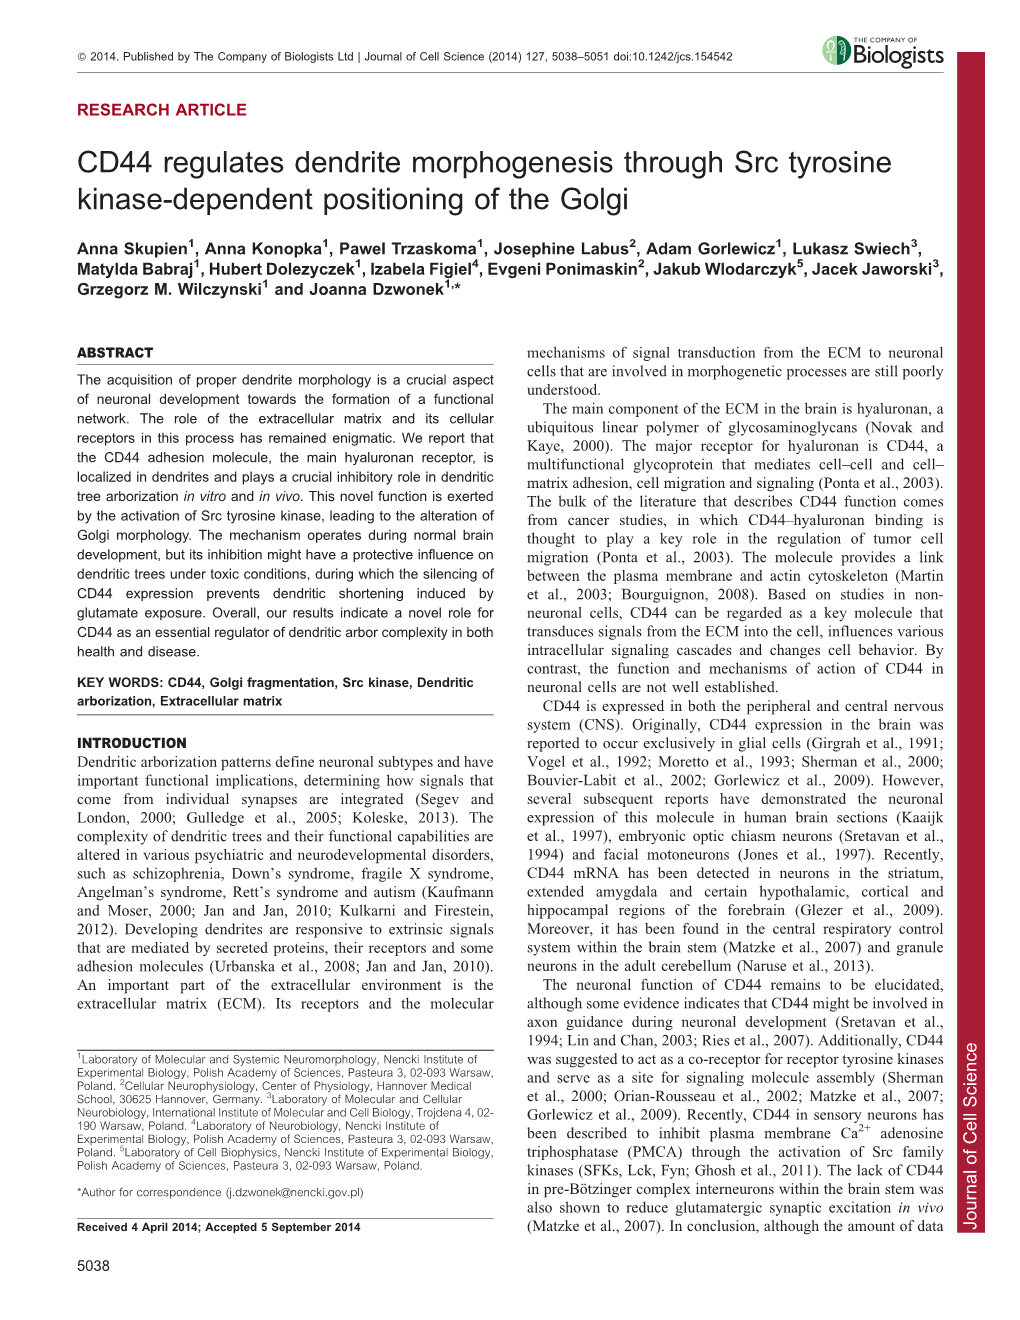 CD44 Regulates Dendrite Morphogenesis